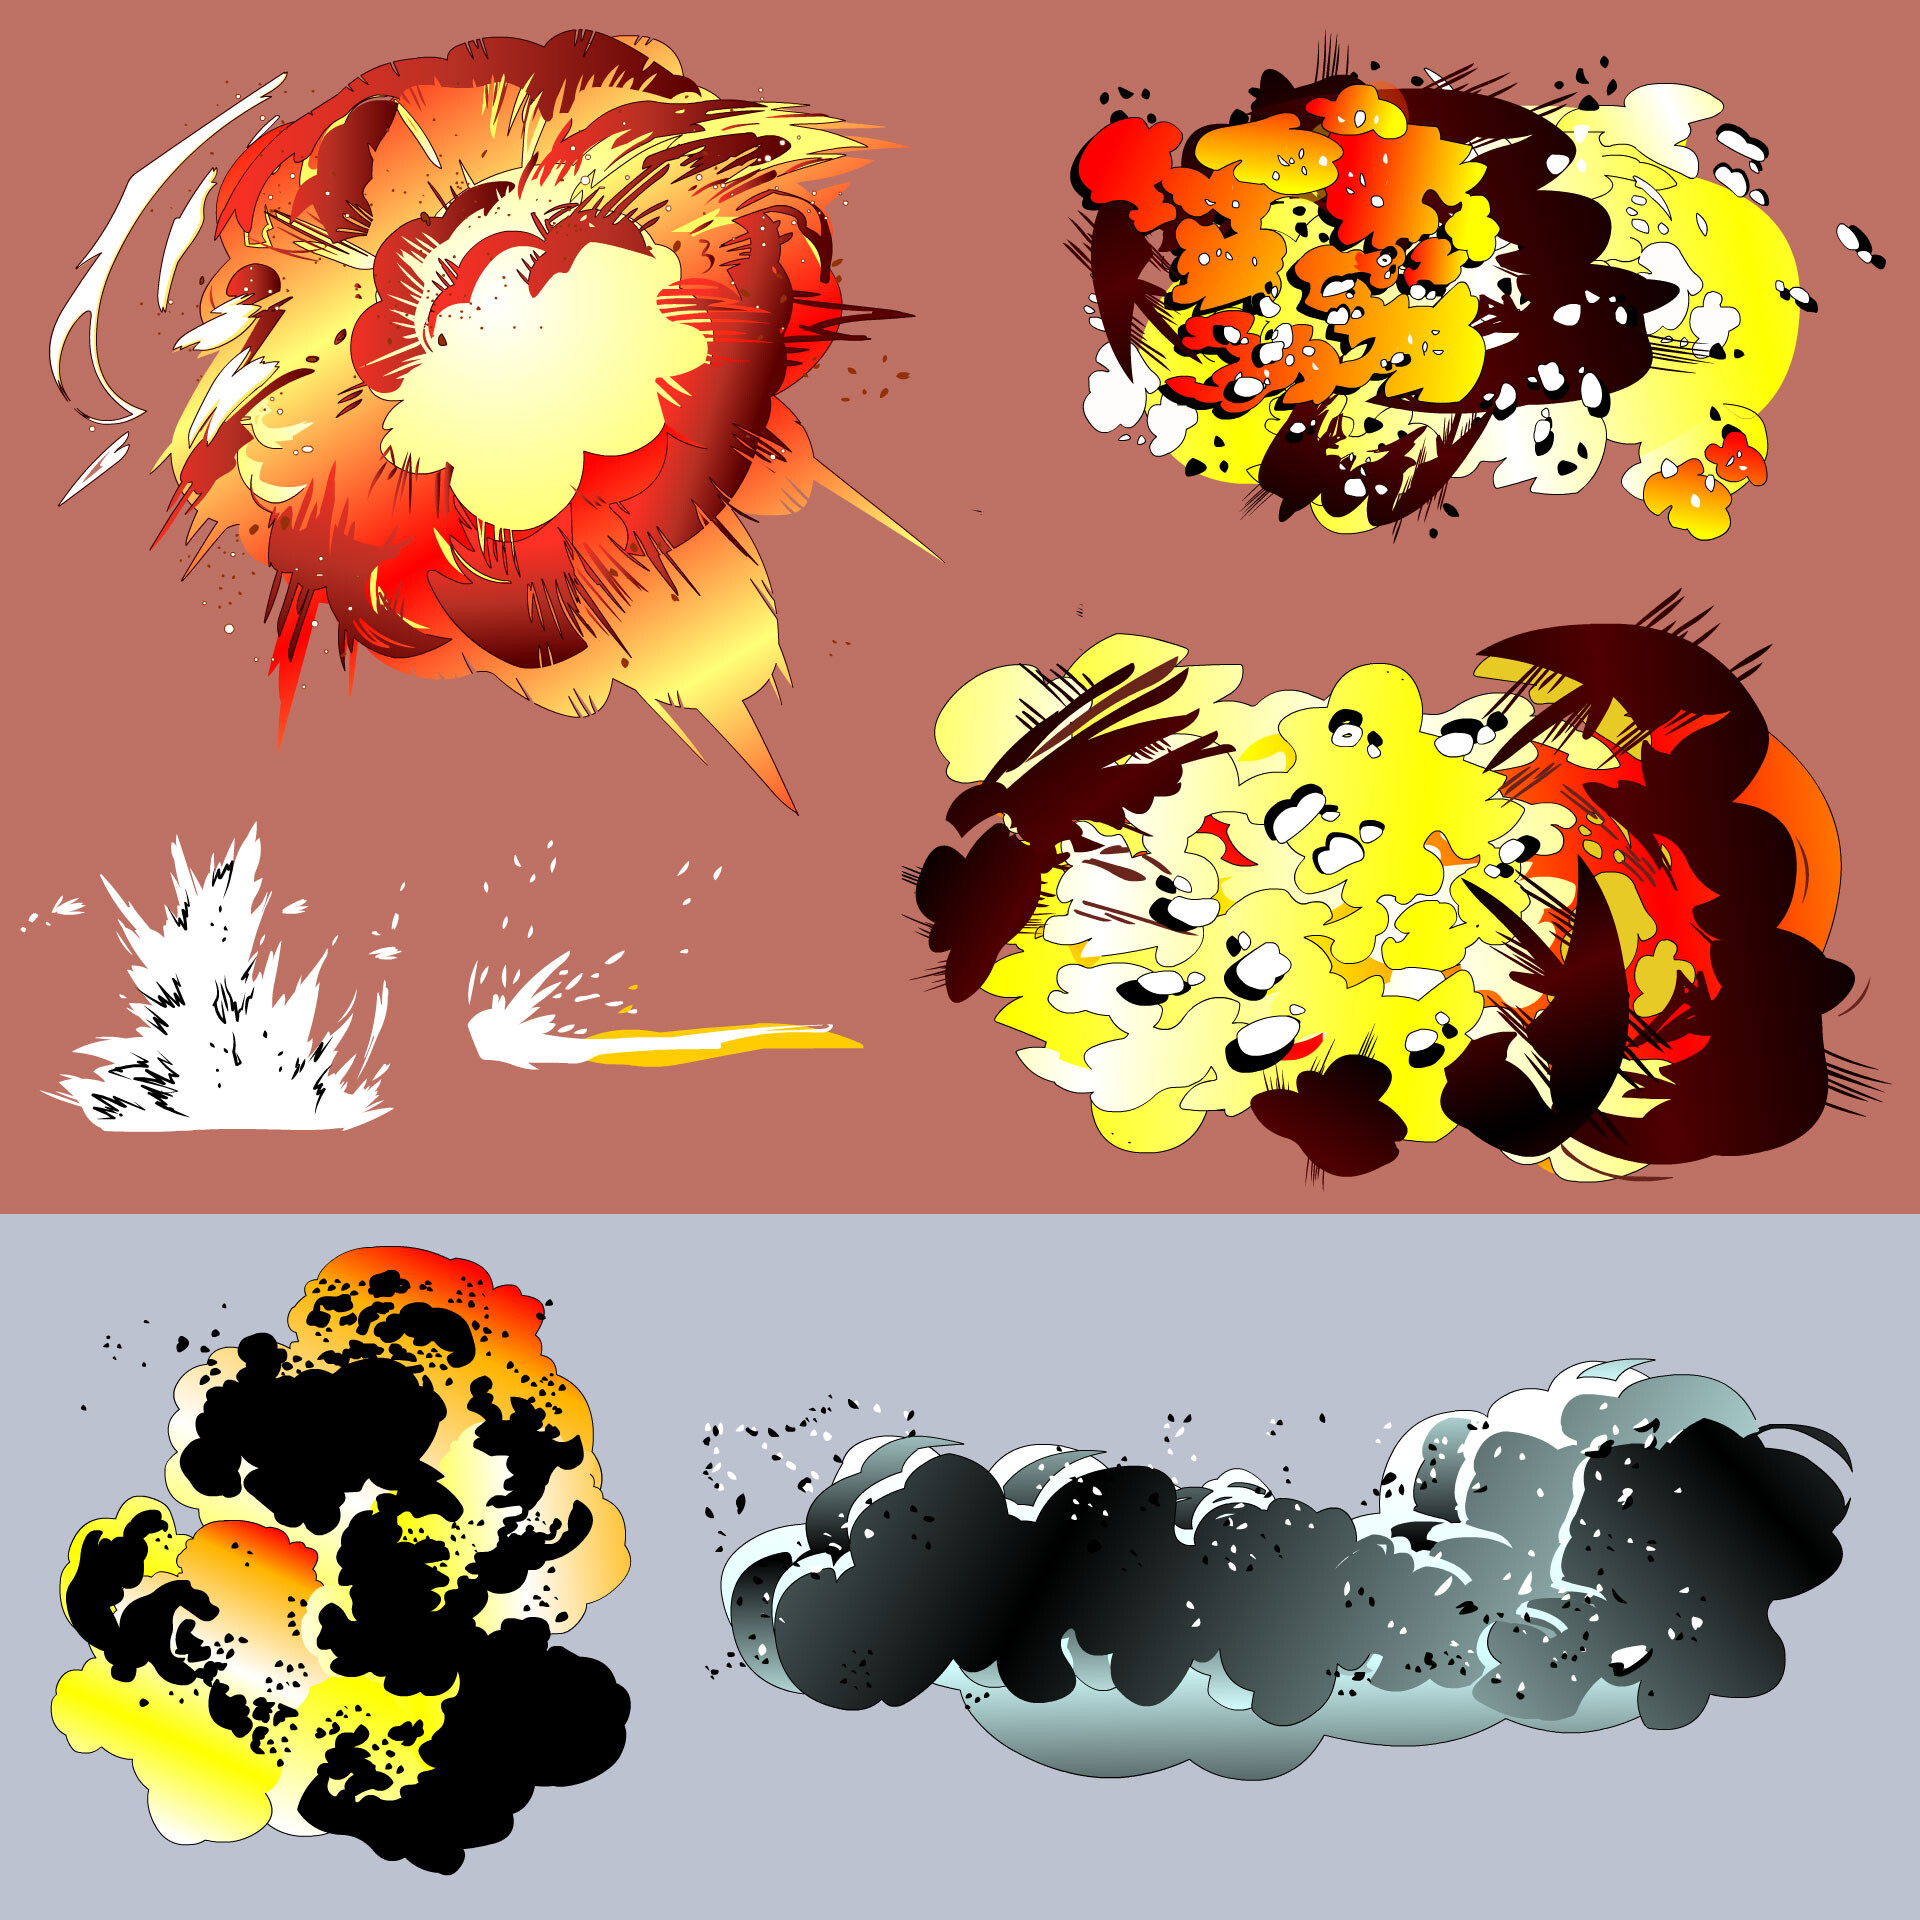 ArtStation - Explosion sketches